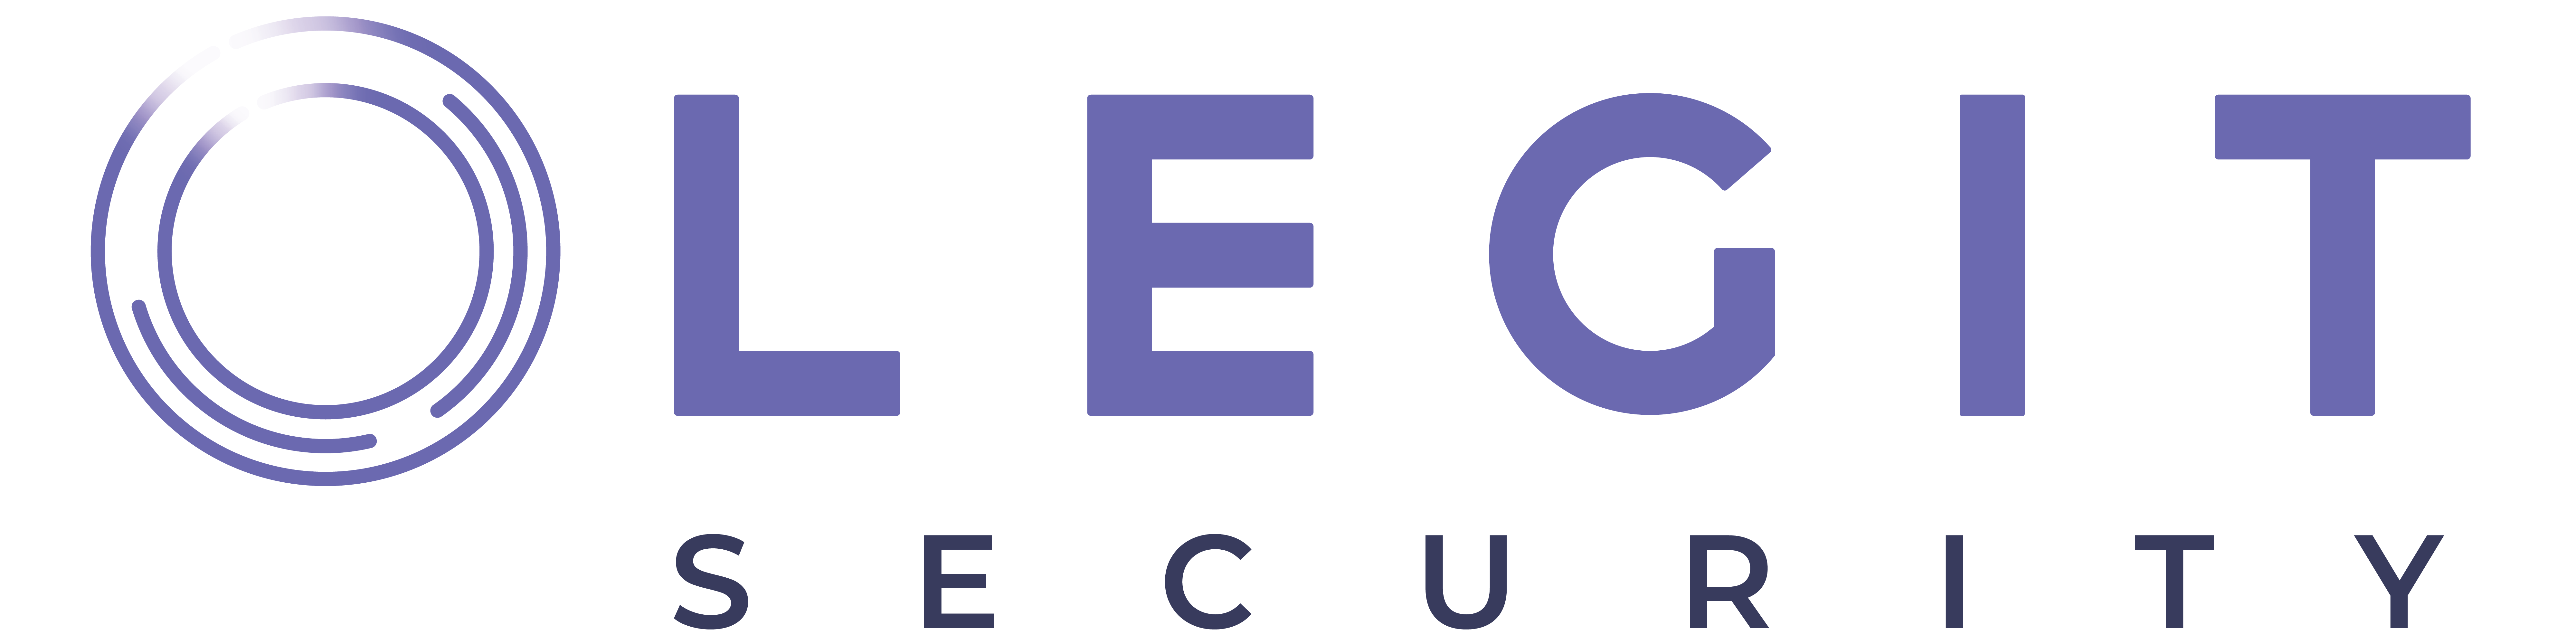 Mkto_Legit_Security_Logo.png